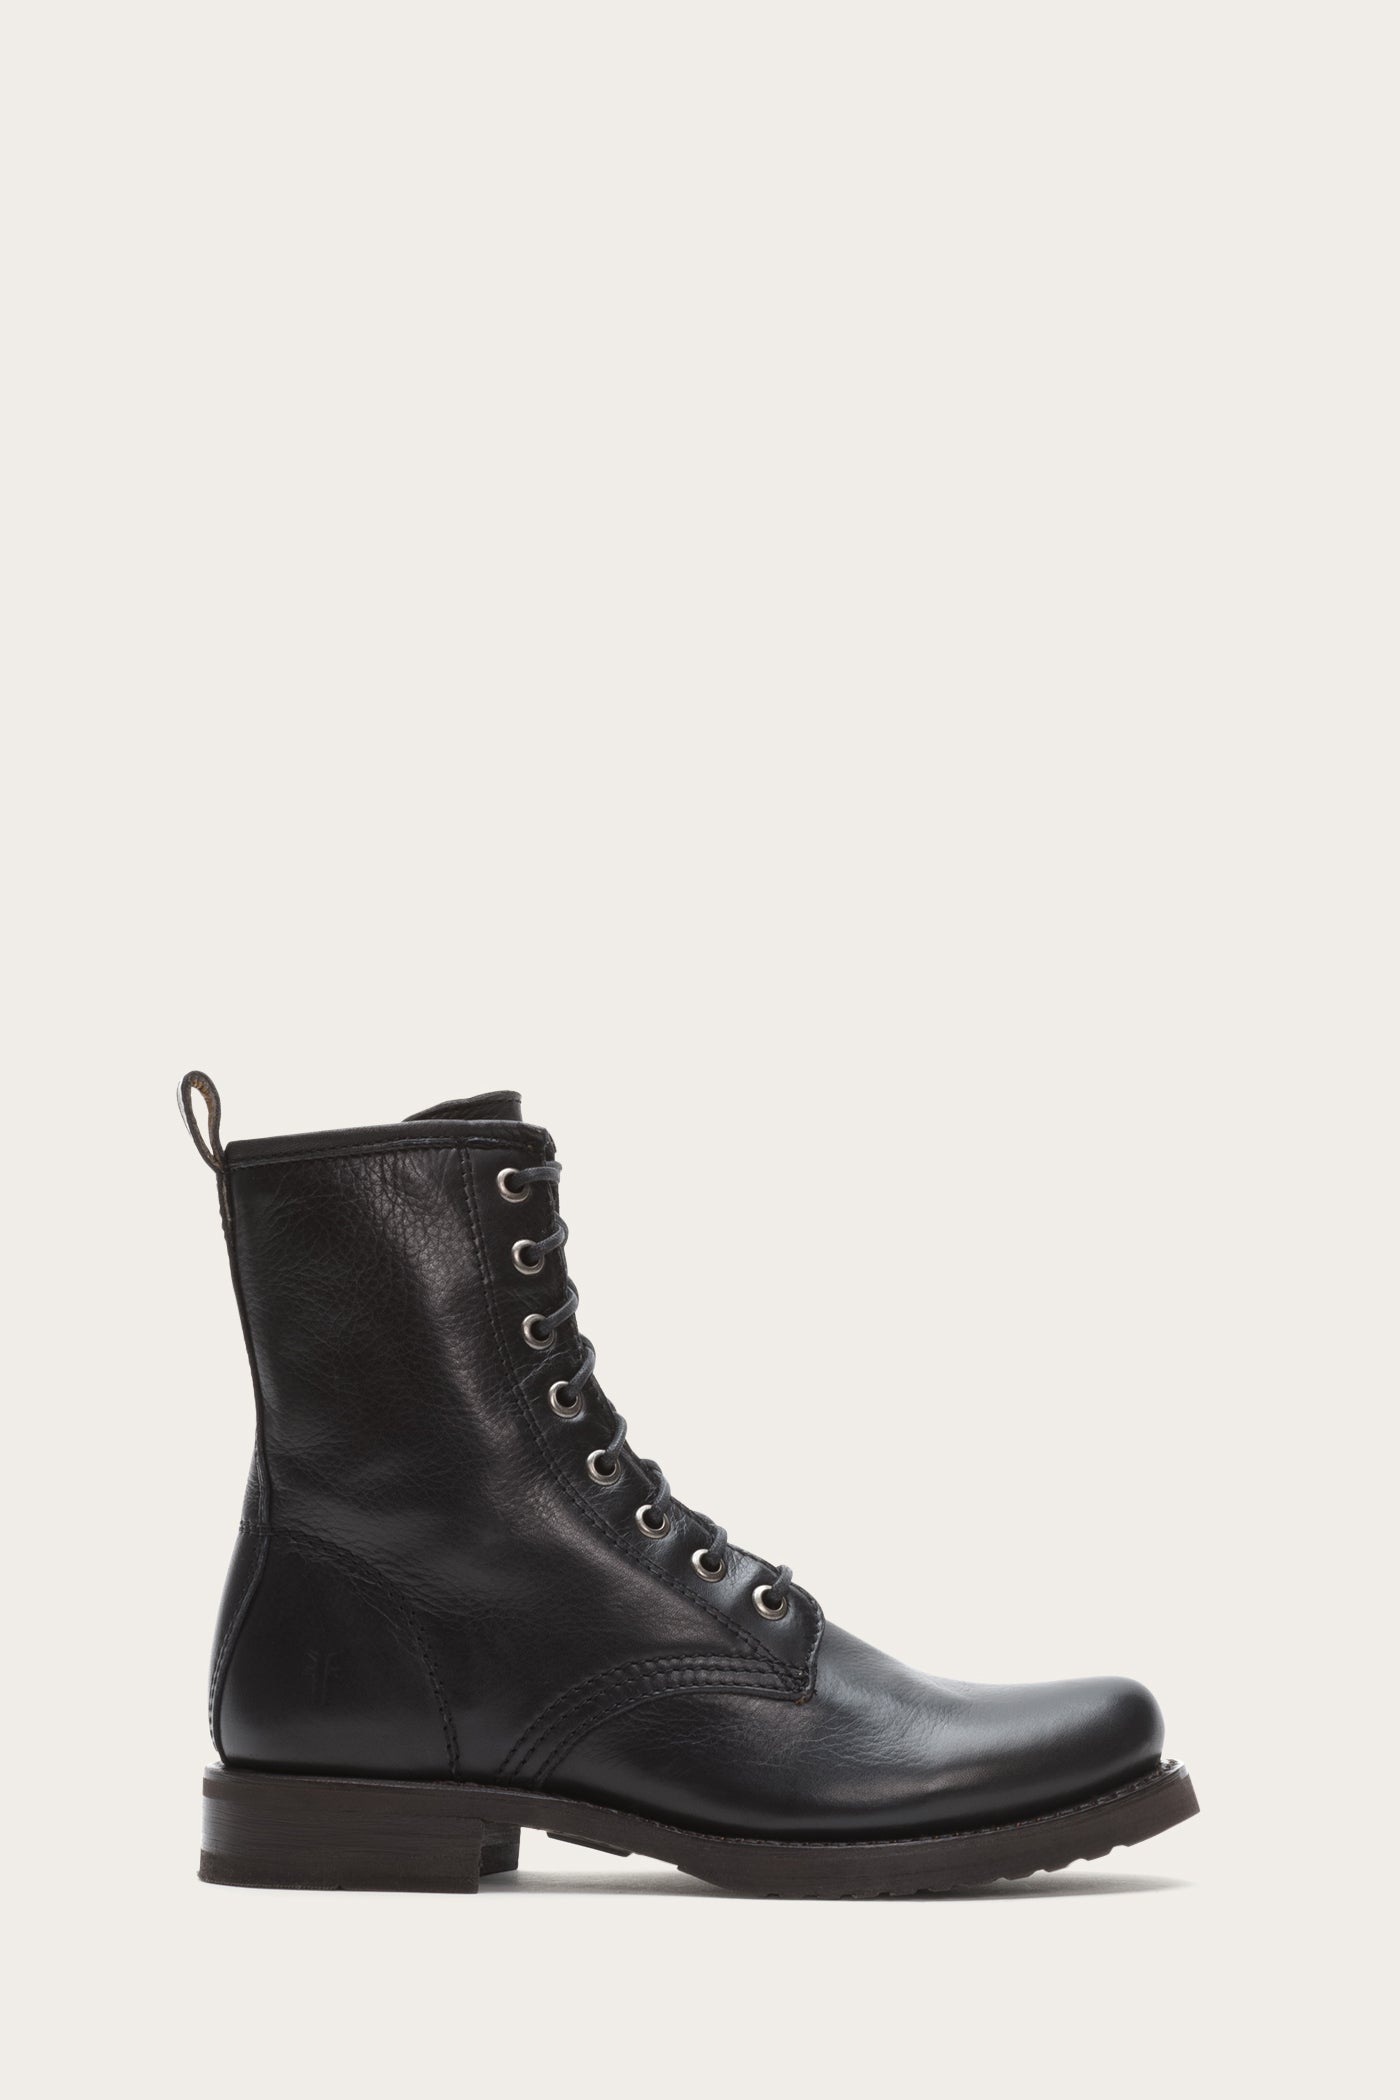 frye veronica boots sale